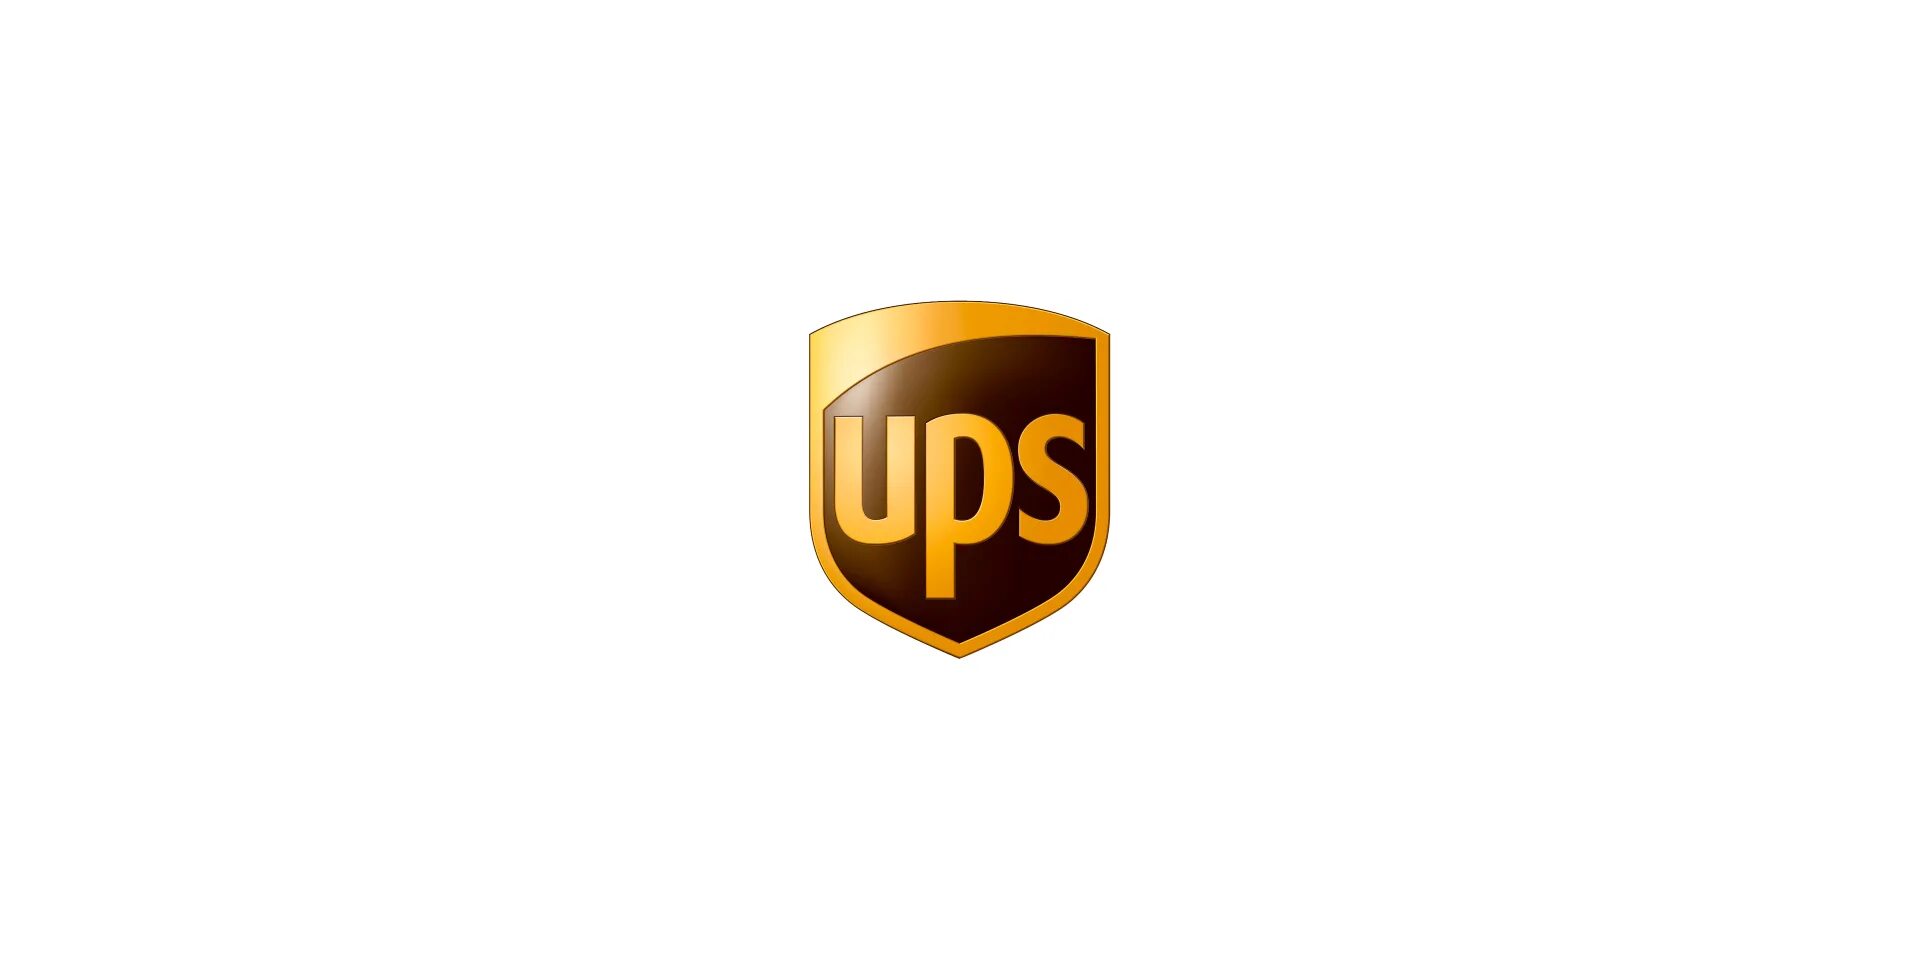 Ups bank. Ups logo. Ups logo PNG. Ups фирменный знак. United parcel service логотип.